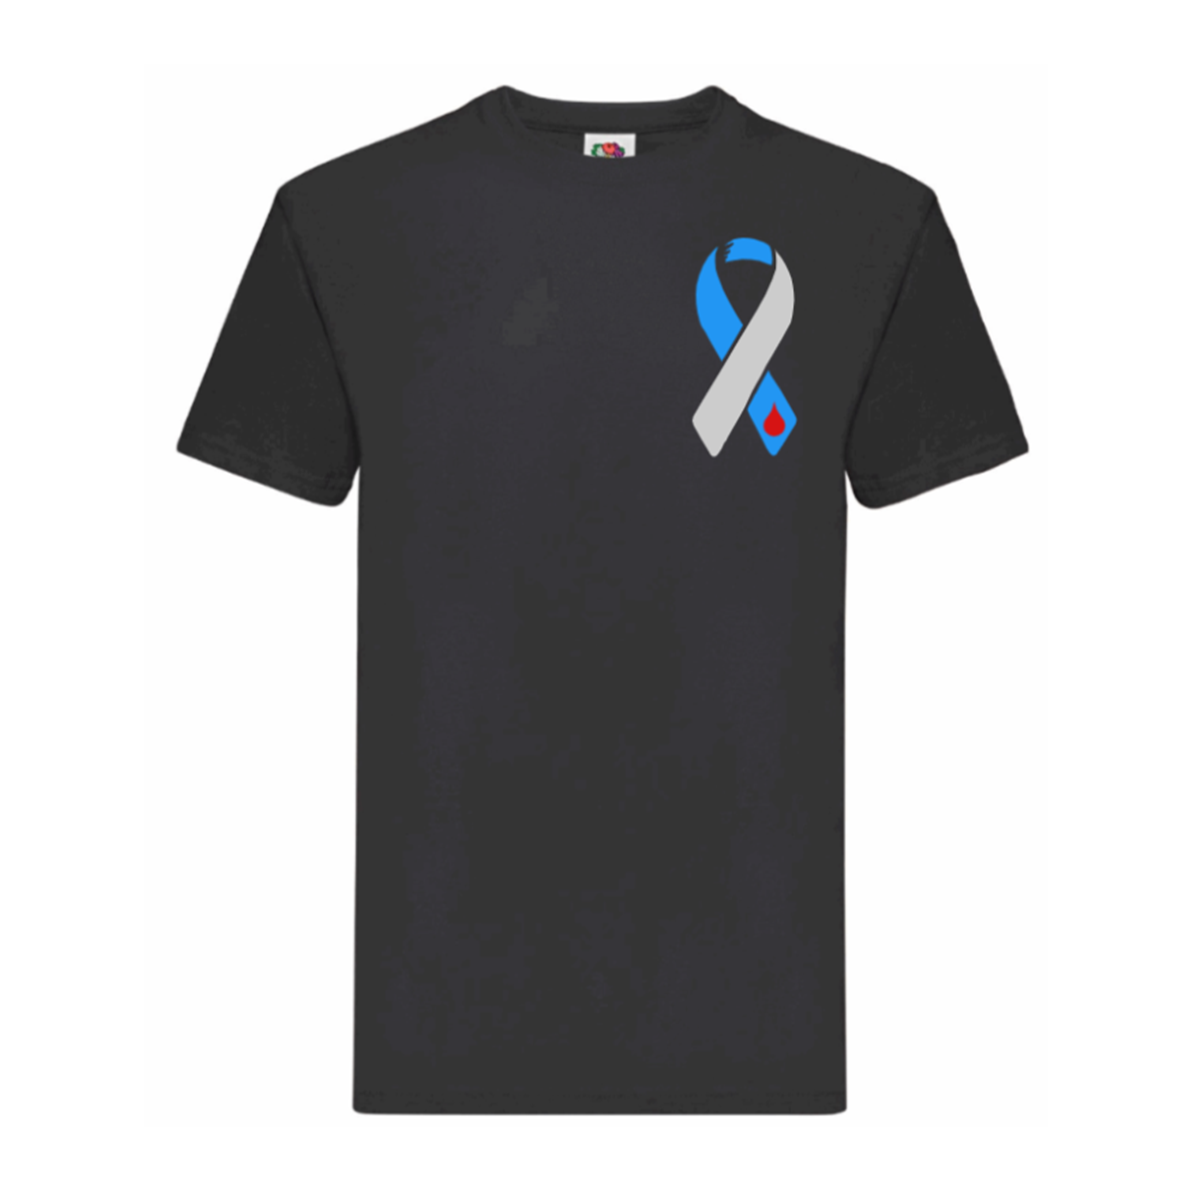 Awareness Ribbon Kids T Shirt